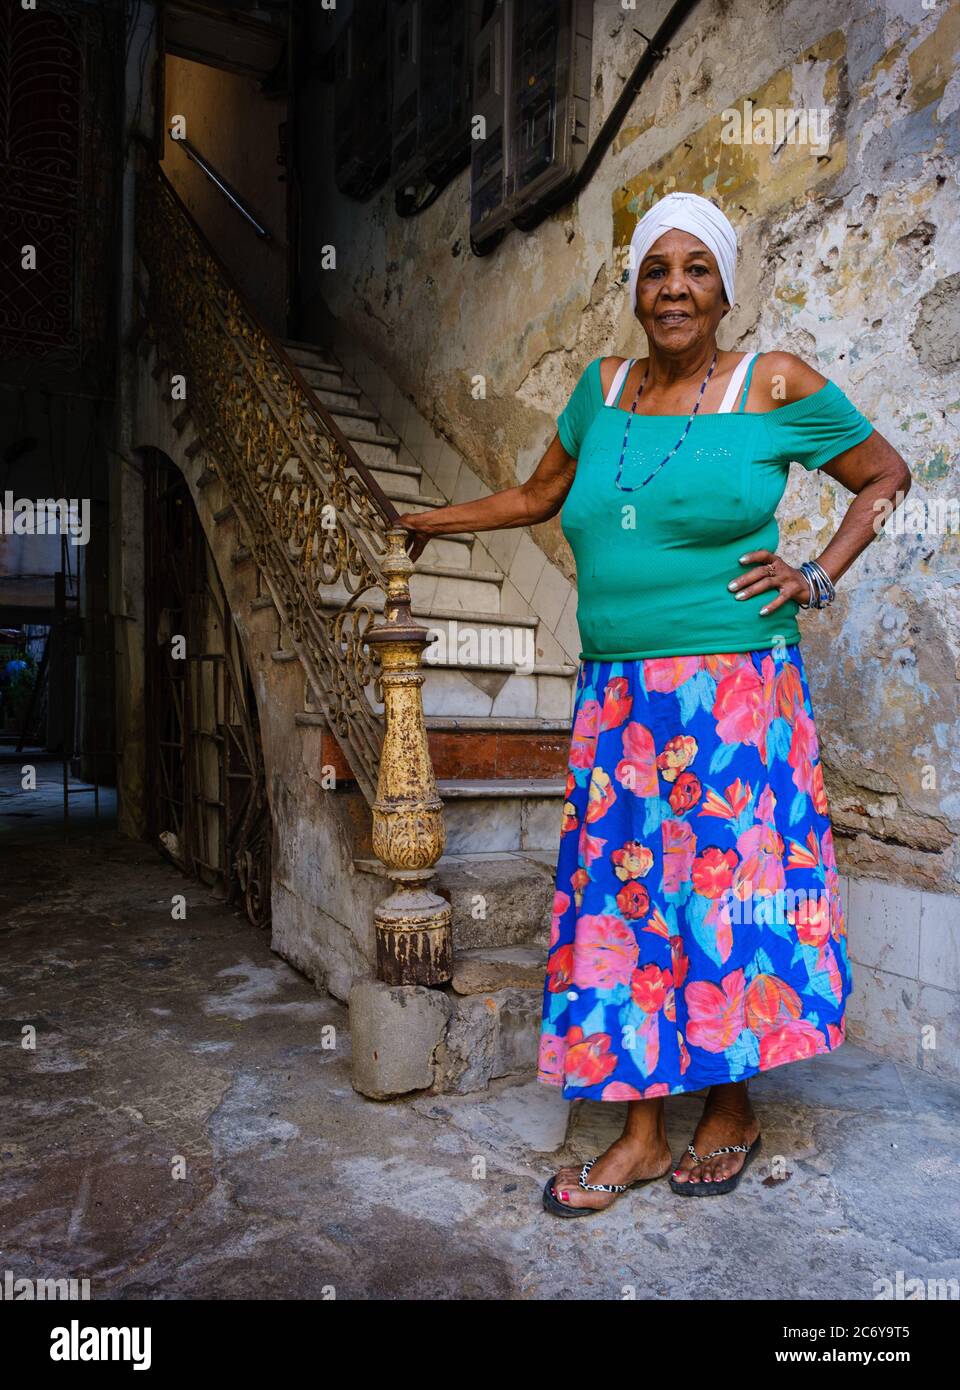 HAVANA, CUBA - CIRCA JANUARY 2020: Portrait of Cuban Woman standing on the entrance of an old building in Havana. Stock Photo